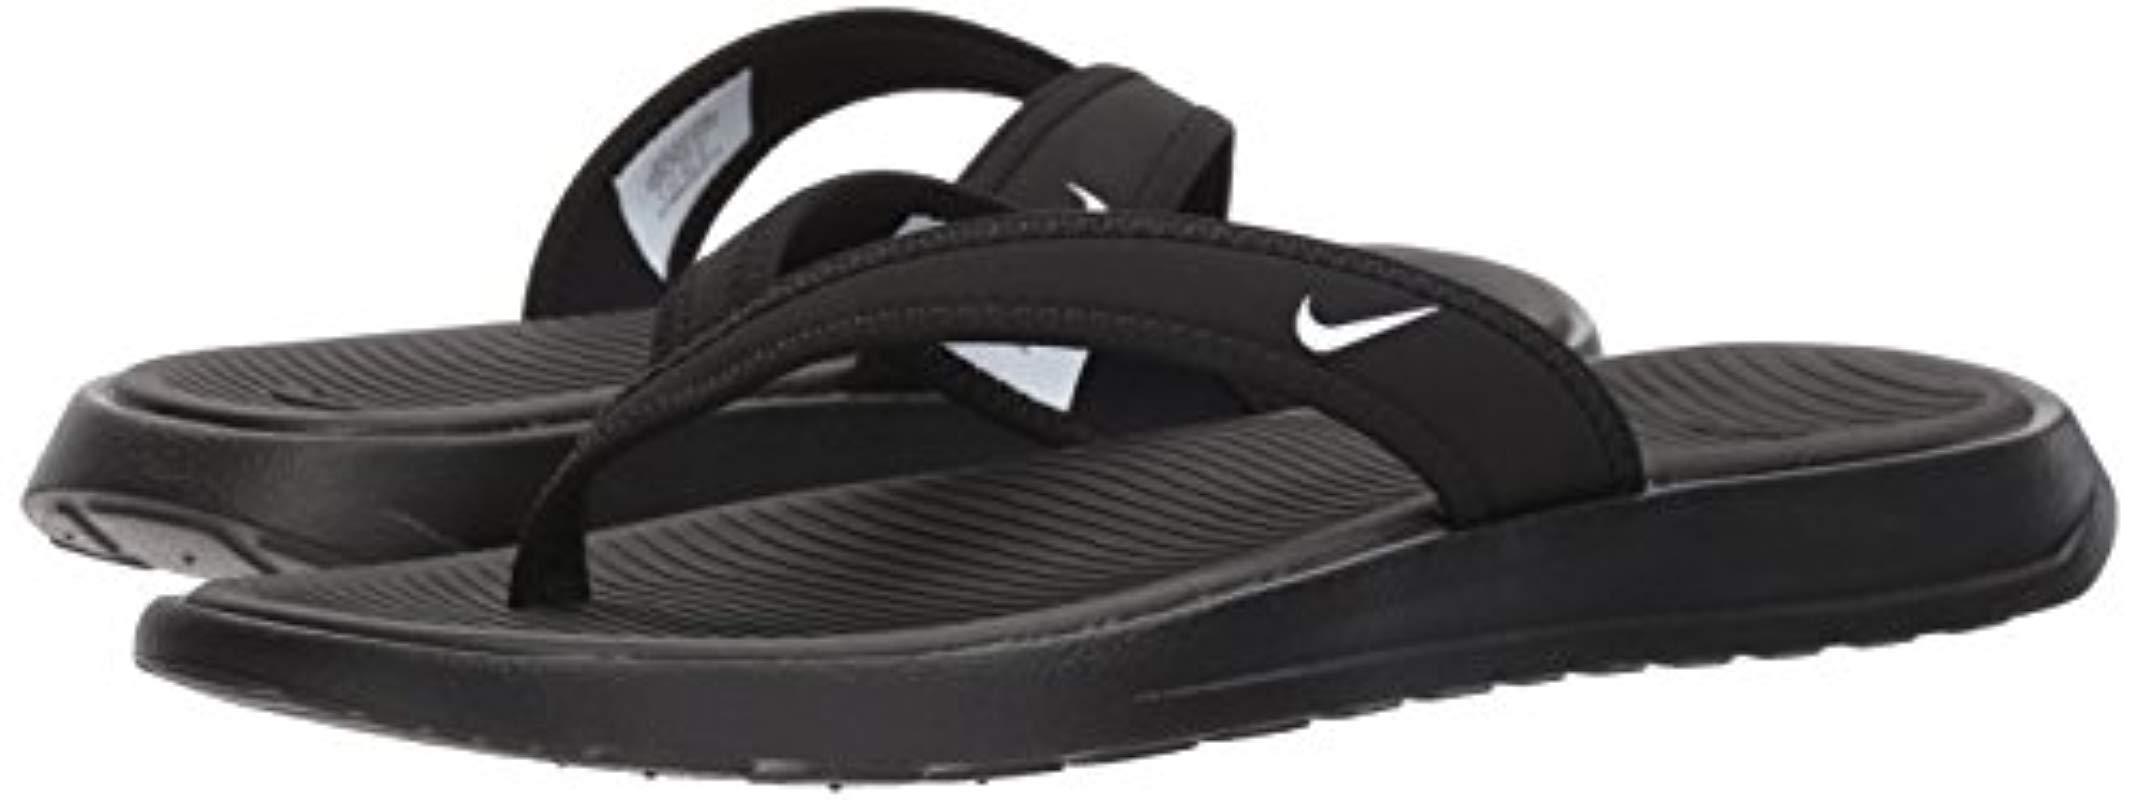 Nike Ultra Celso Thong Flip-flop, Black/white, 9.0 Regular Us